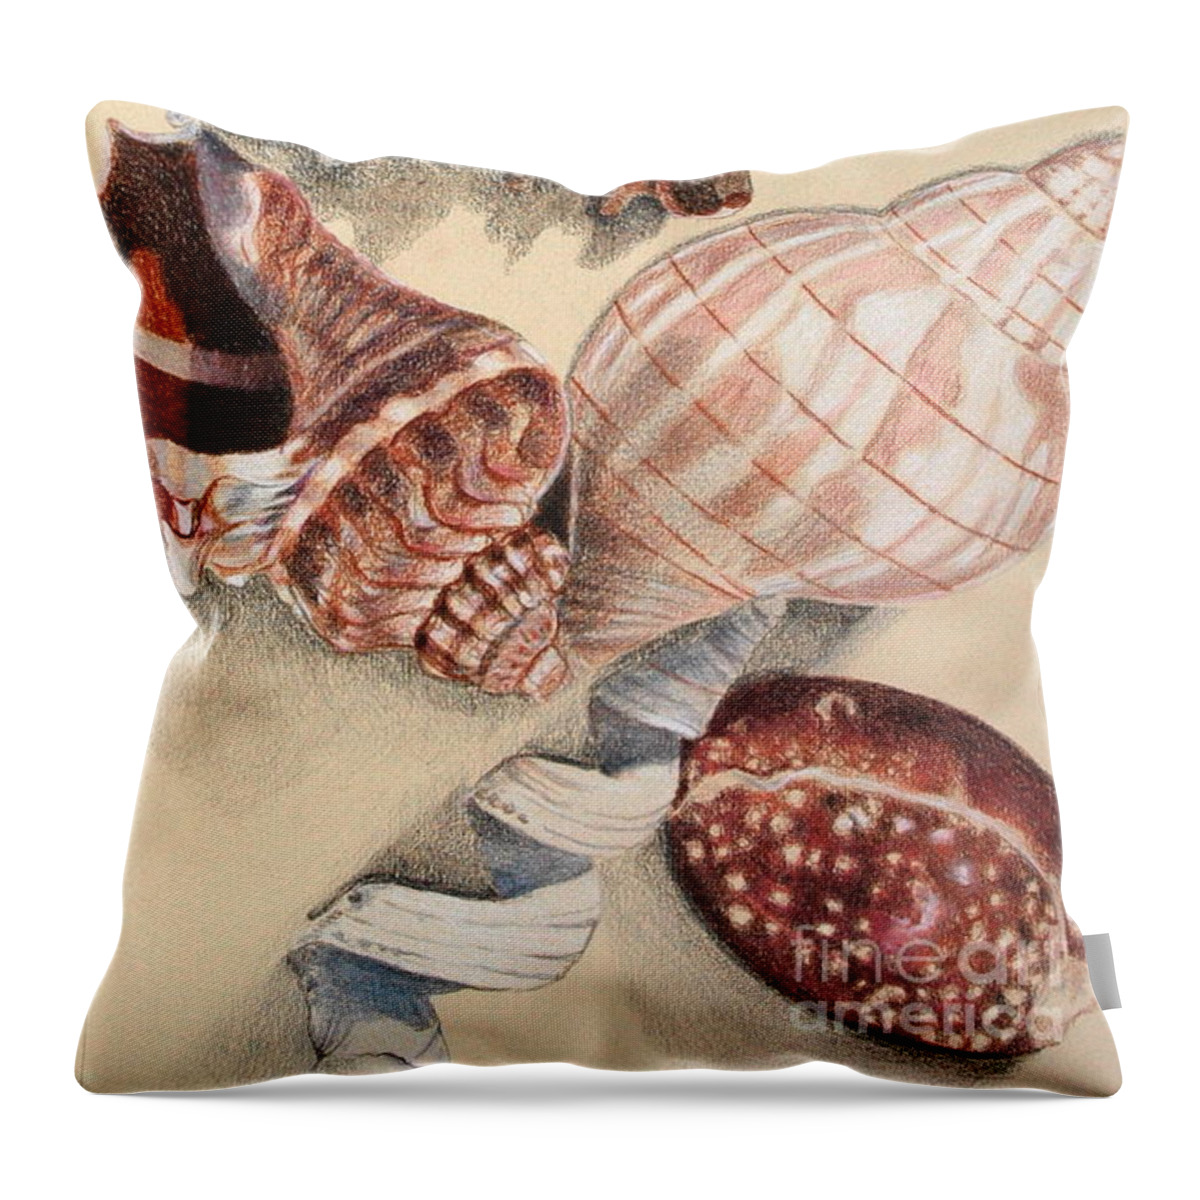 Shell Throw Pillow featuring the drawing Vertical Conch Shells by Glenda Zuckerman